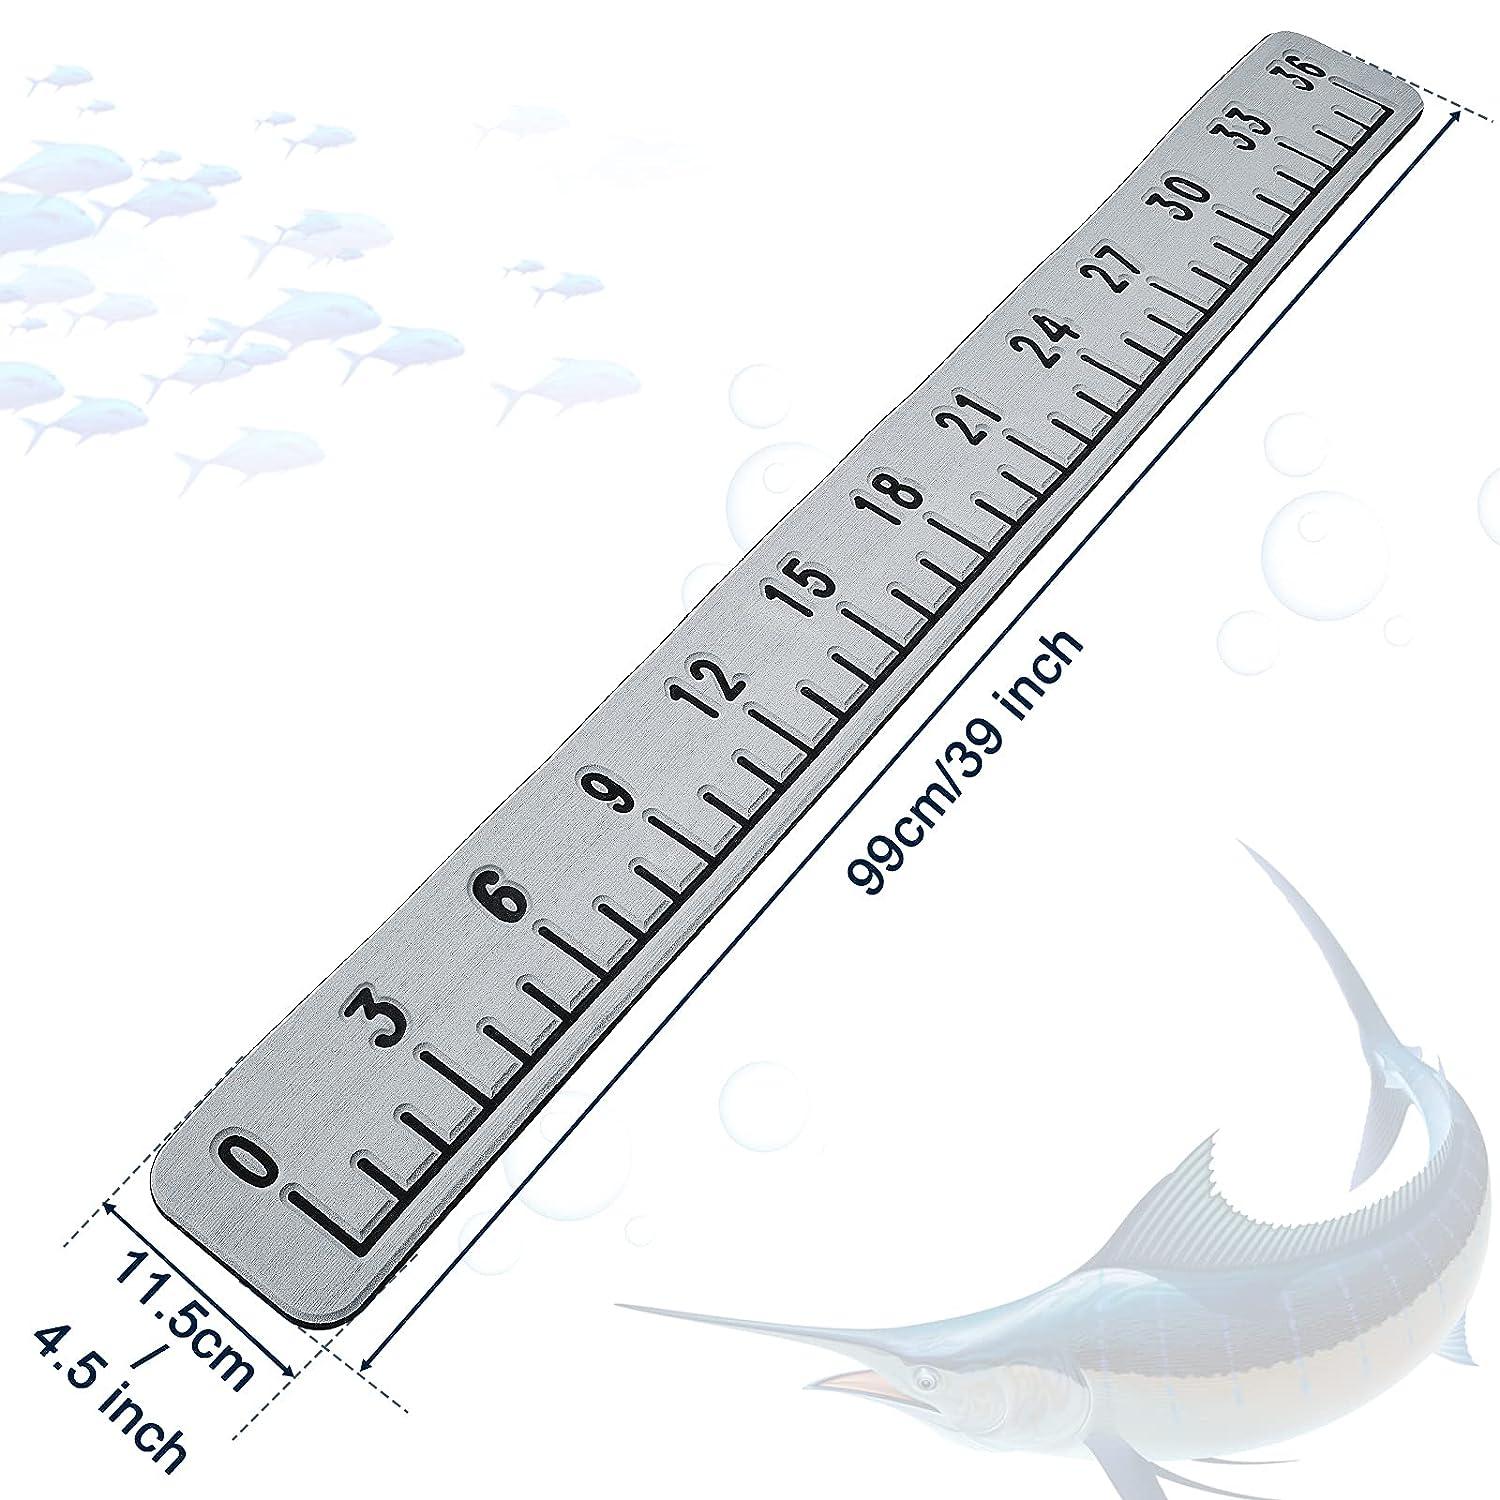 Fish Ruler - 60cm Boat Ruler - Fishing Measuring Tape by FishRule